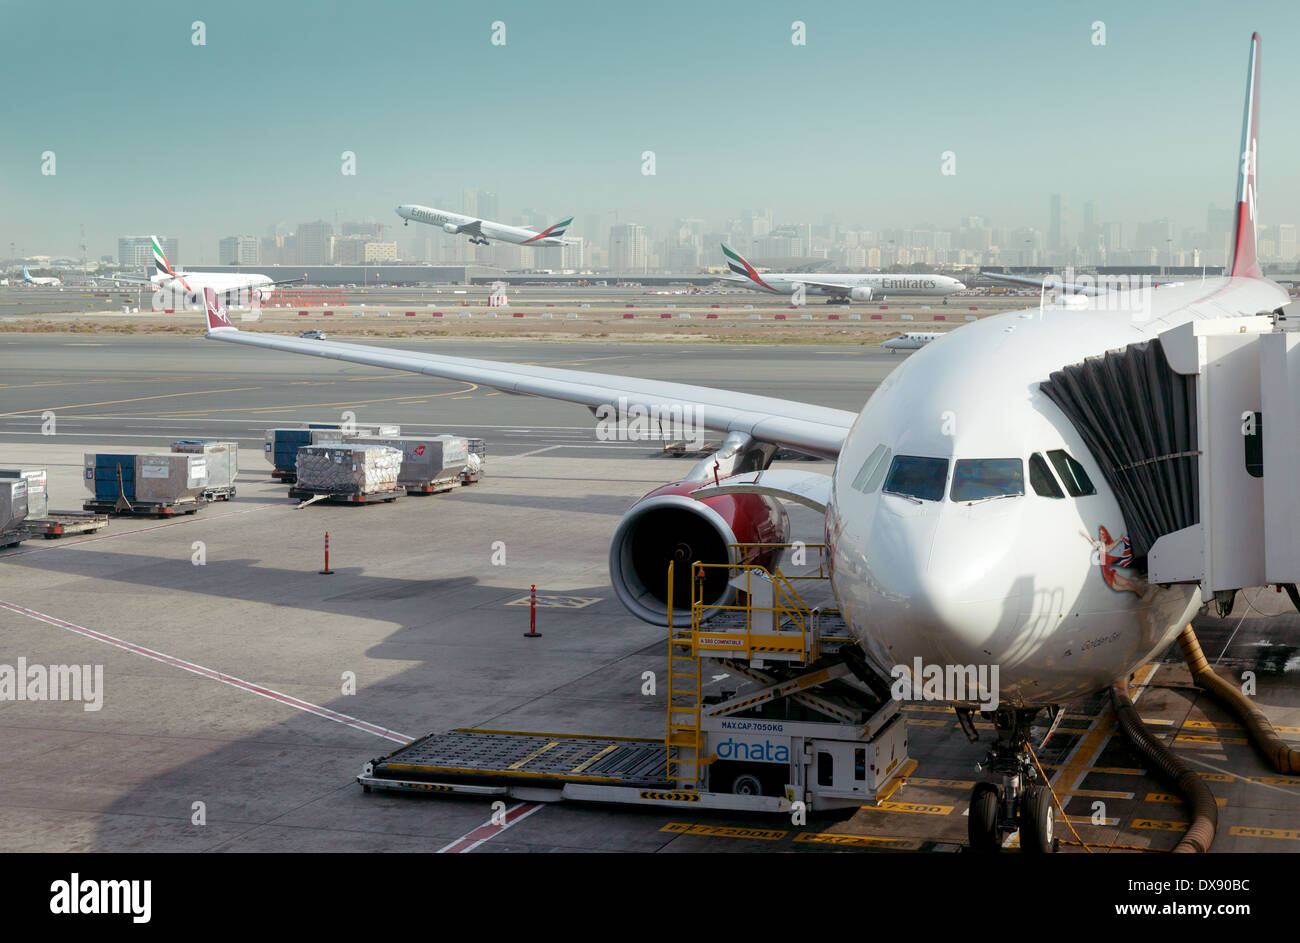 Dubai airport - Virgin Atlantic plane on the ground and Emirates planes taking off; Dubai, UAE United Arab Emirates, Middle East Stock Photo